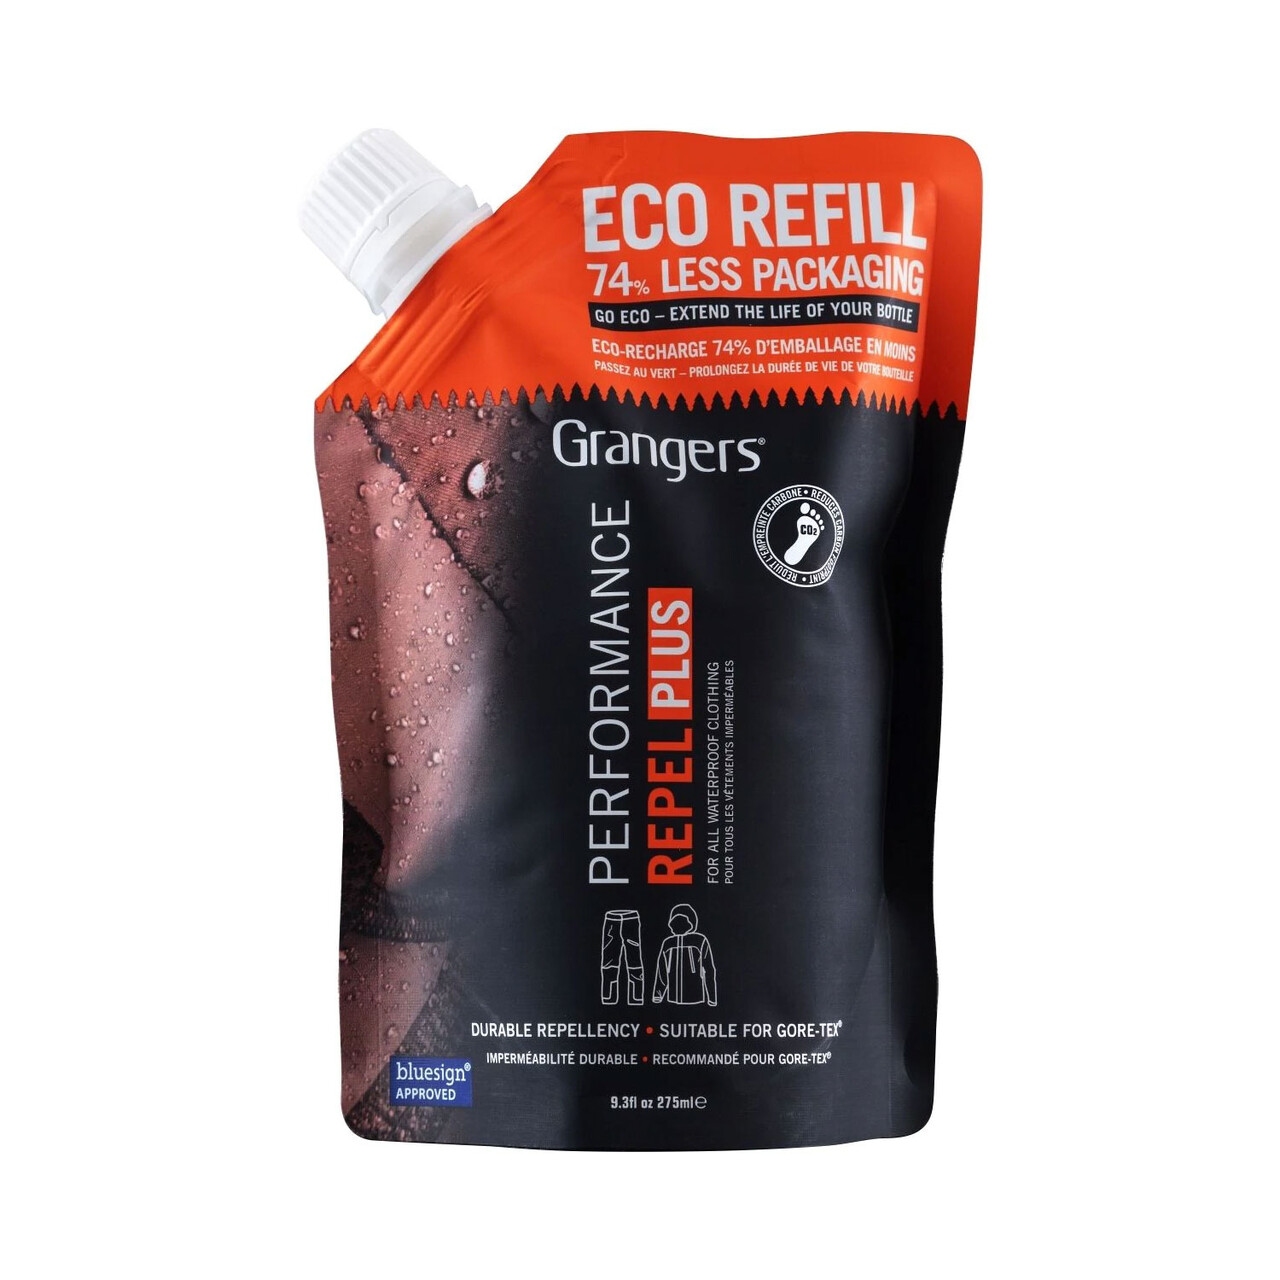 Se Grangers Performance Repel Plus Eco Refill 275ml hos Friluftsland.dk